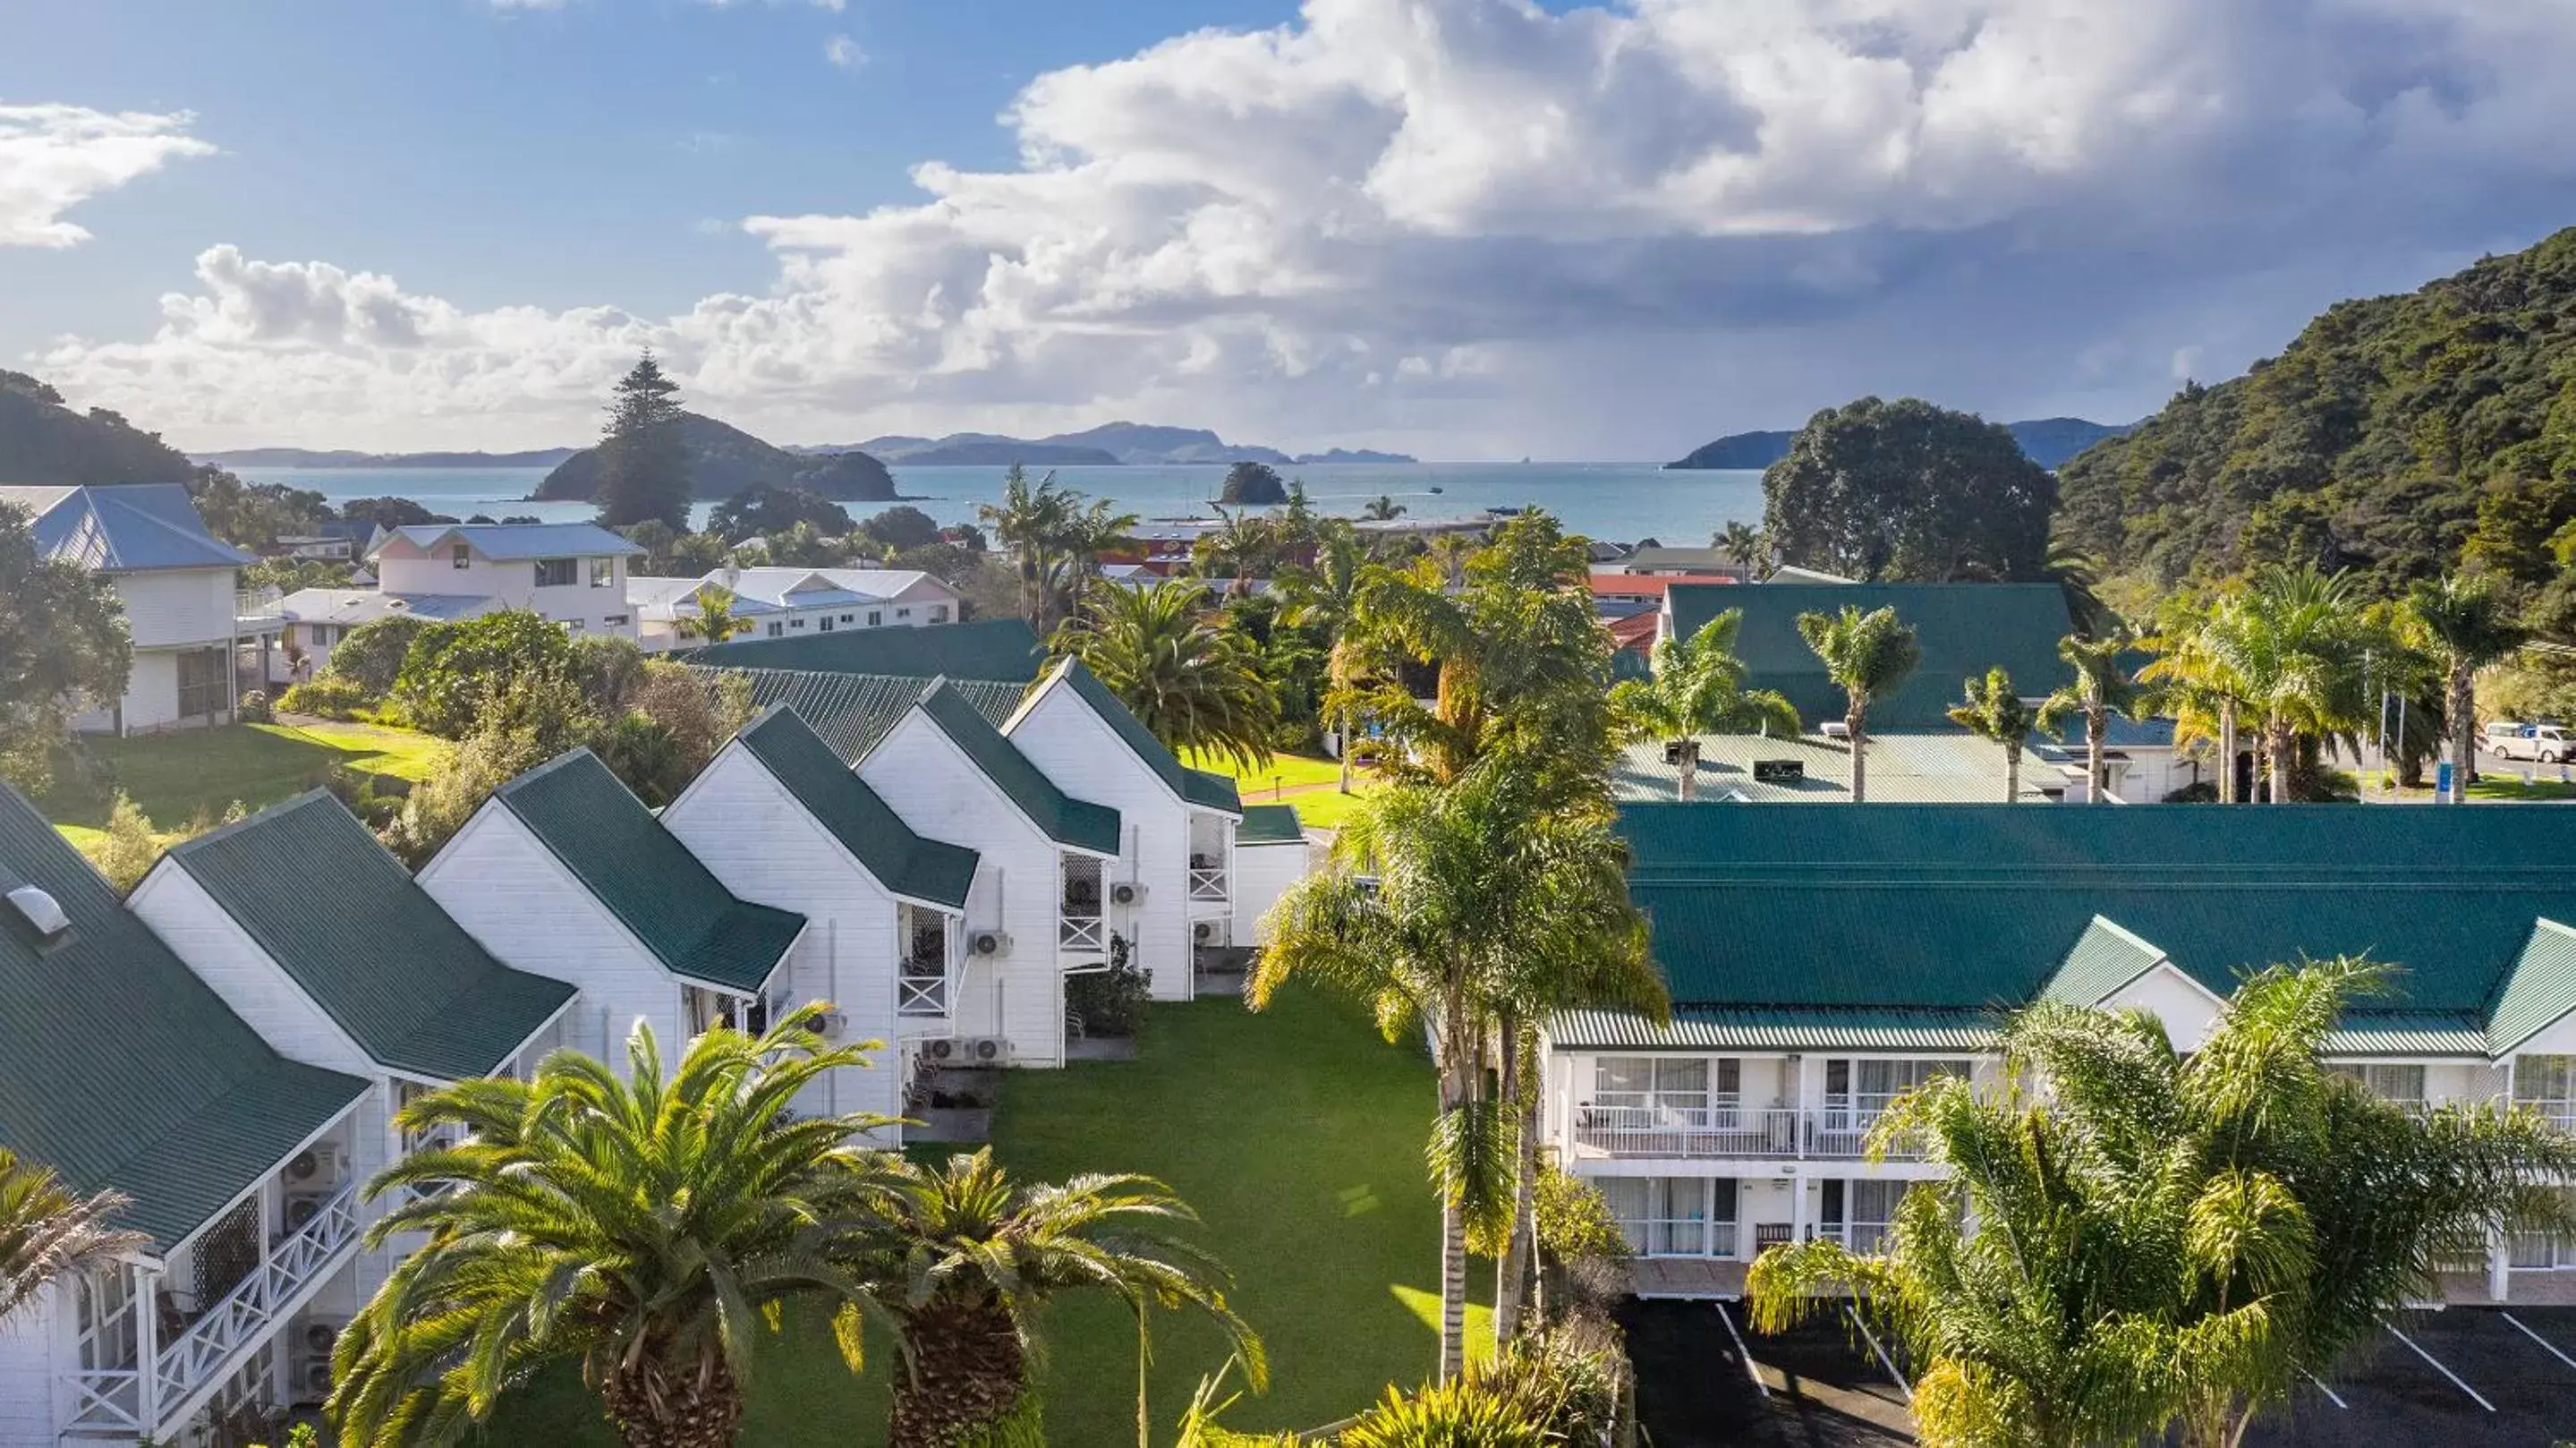 Neighbourhood in Scenic Hotel Bay of Islands